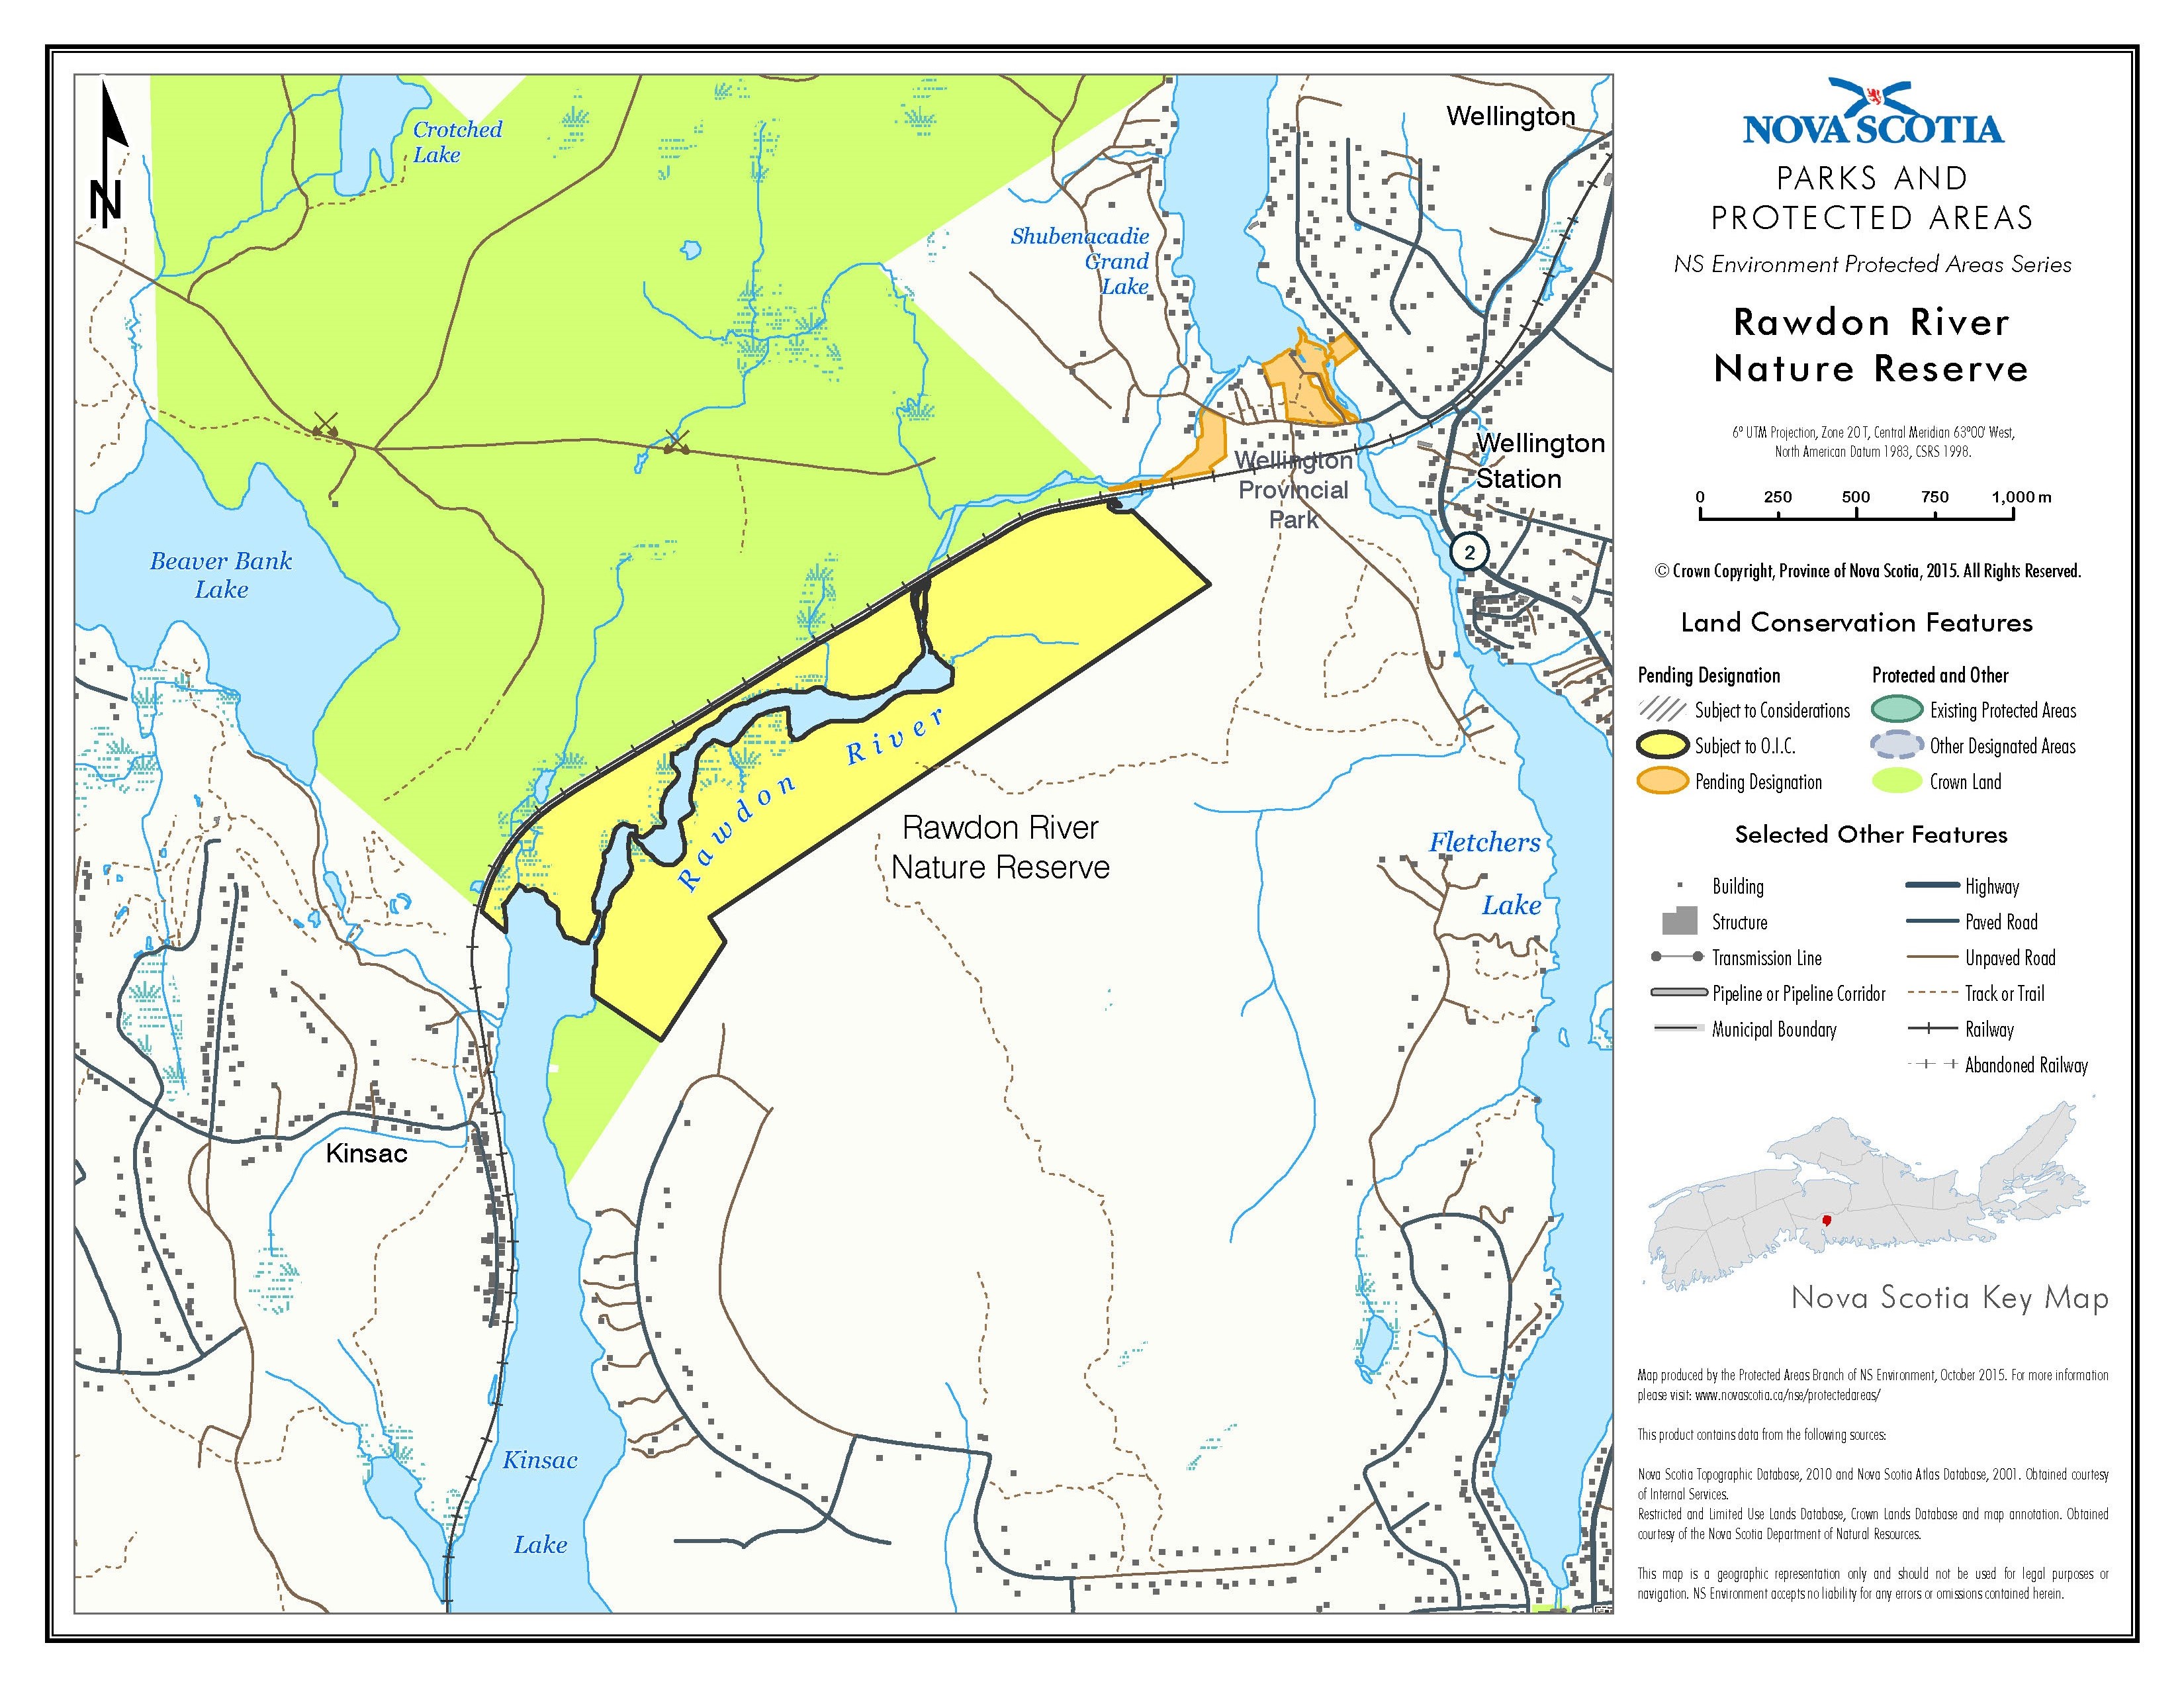 Approximate boundaries of Rawdon River Nature Reserve